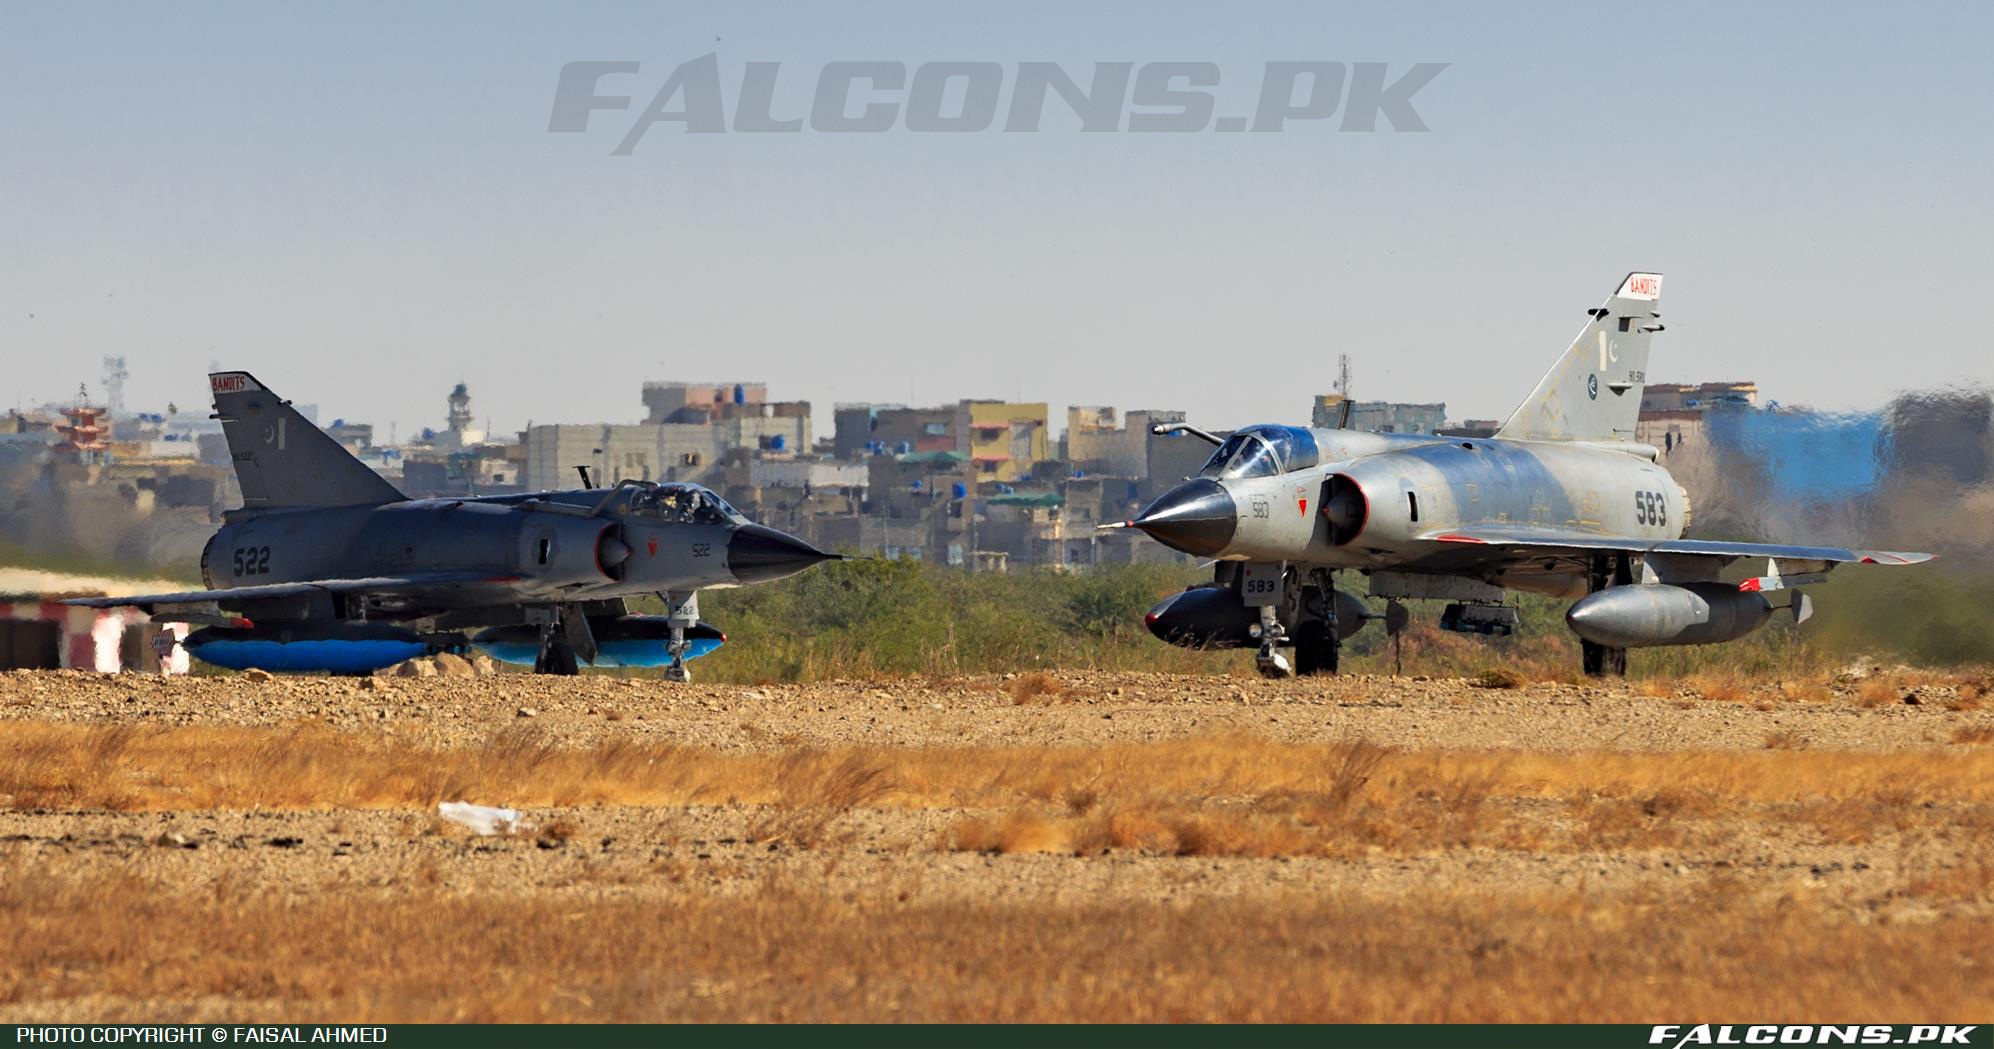 Pakistan Air Force (PAF) Dassault Mirage IIIEA, Reg: 90-583 (Photo by Faisal Ahmed)